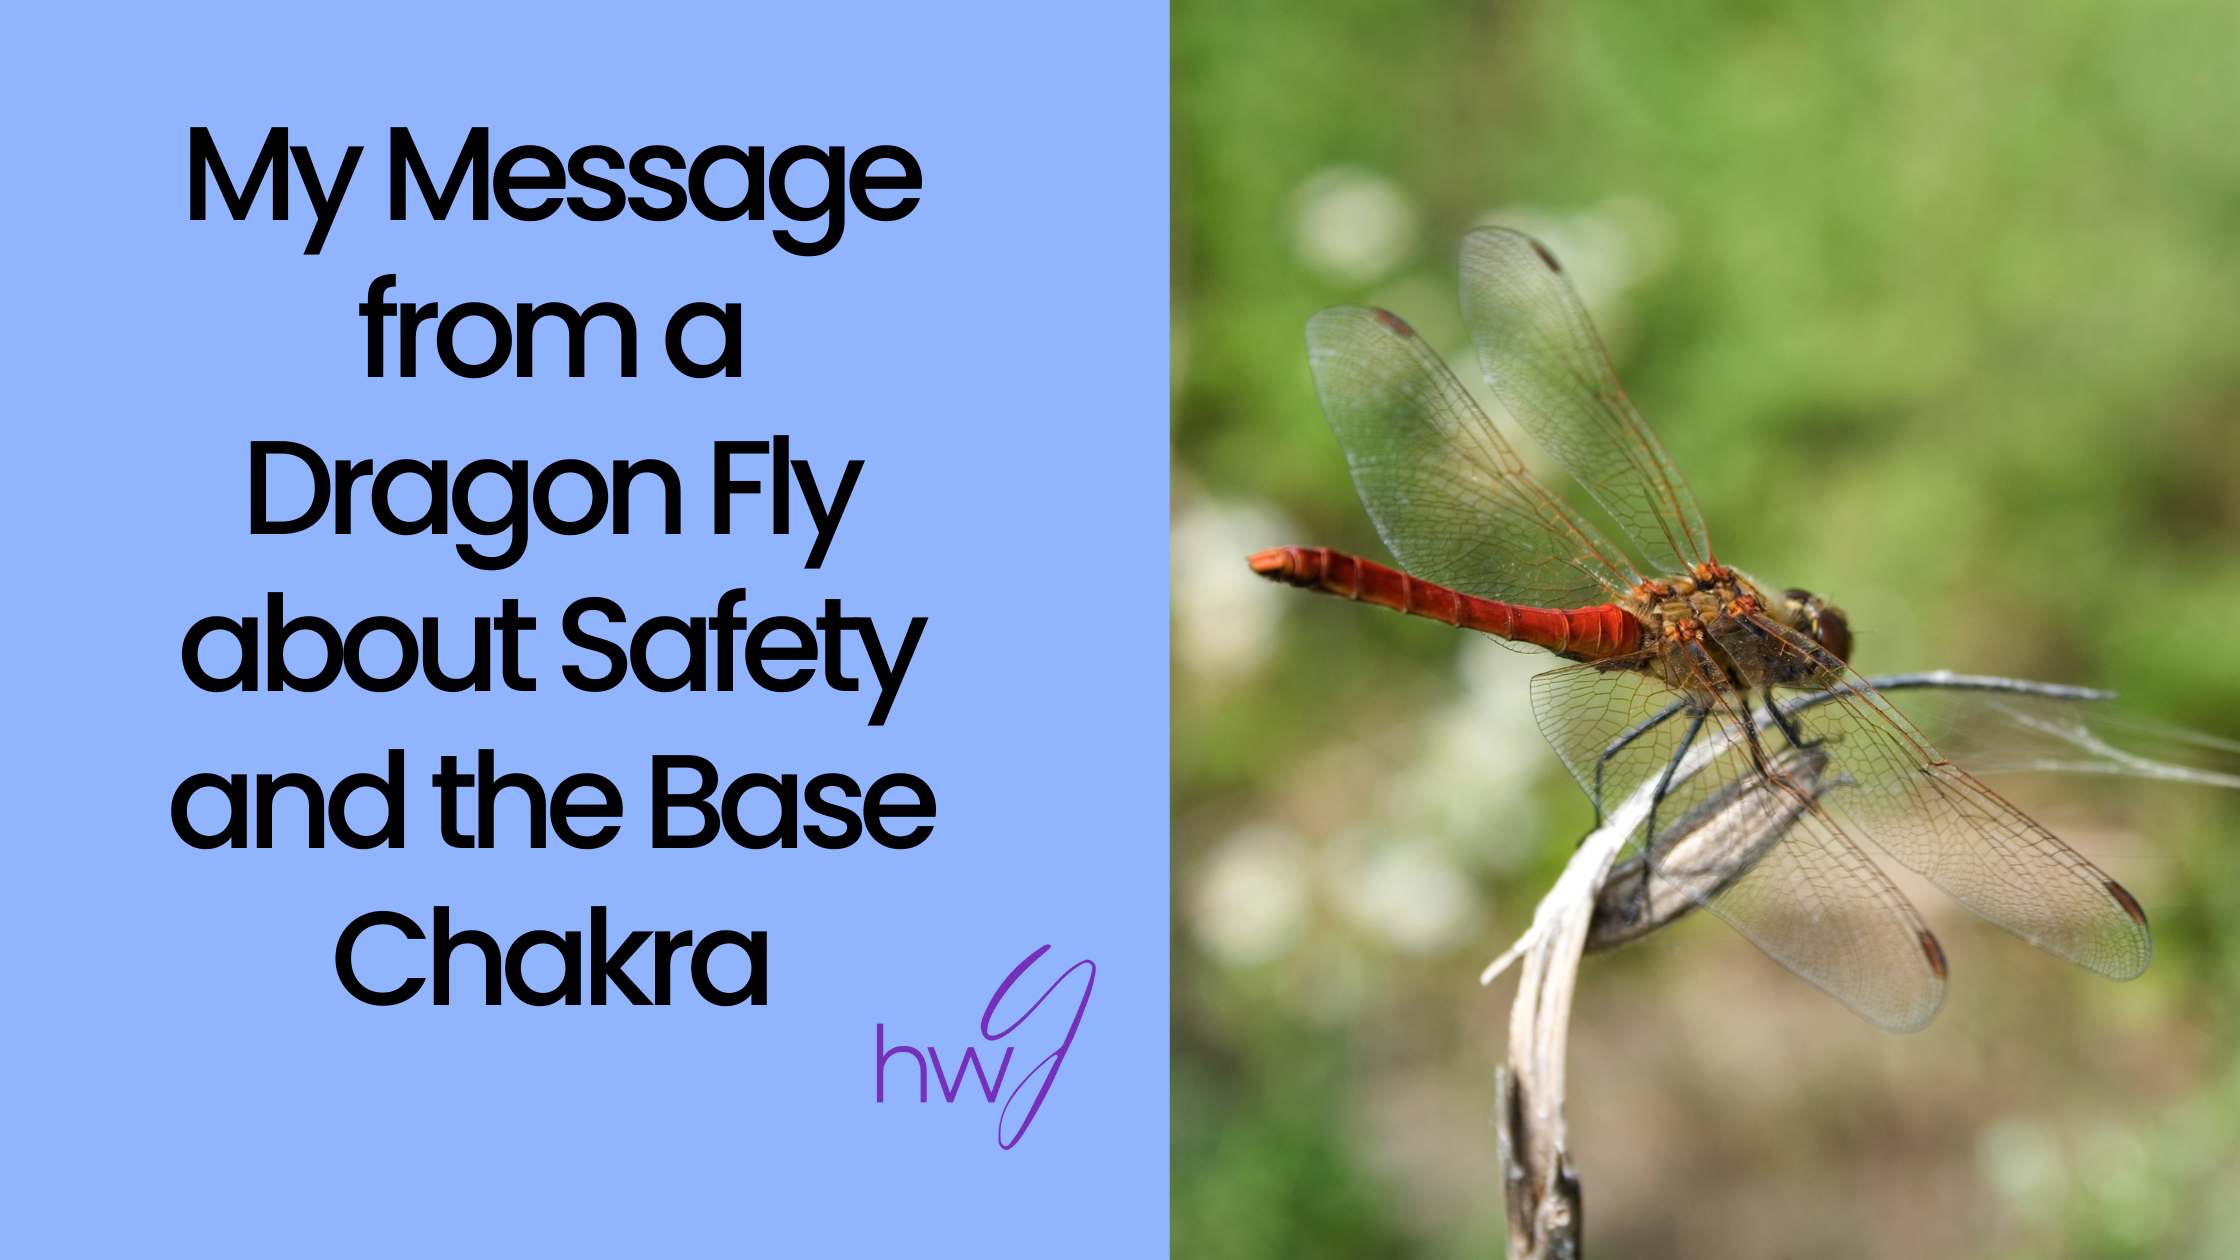 My Base Chakra: The Dragon Fly Speaks